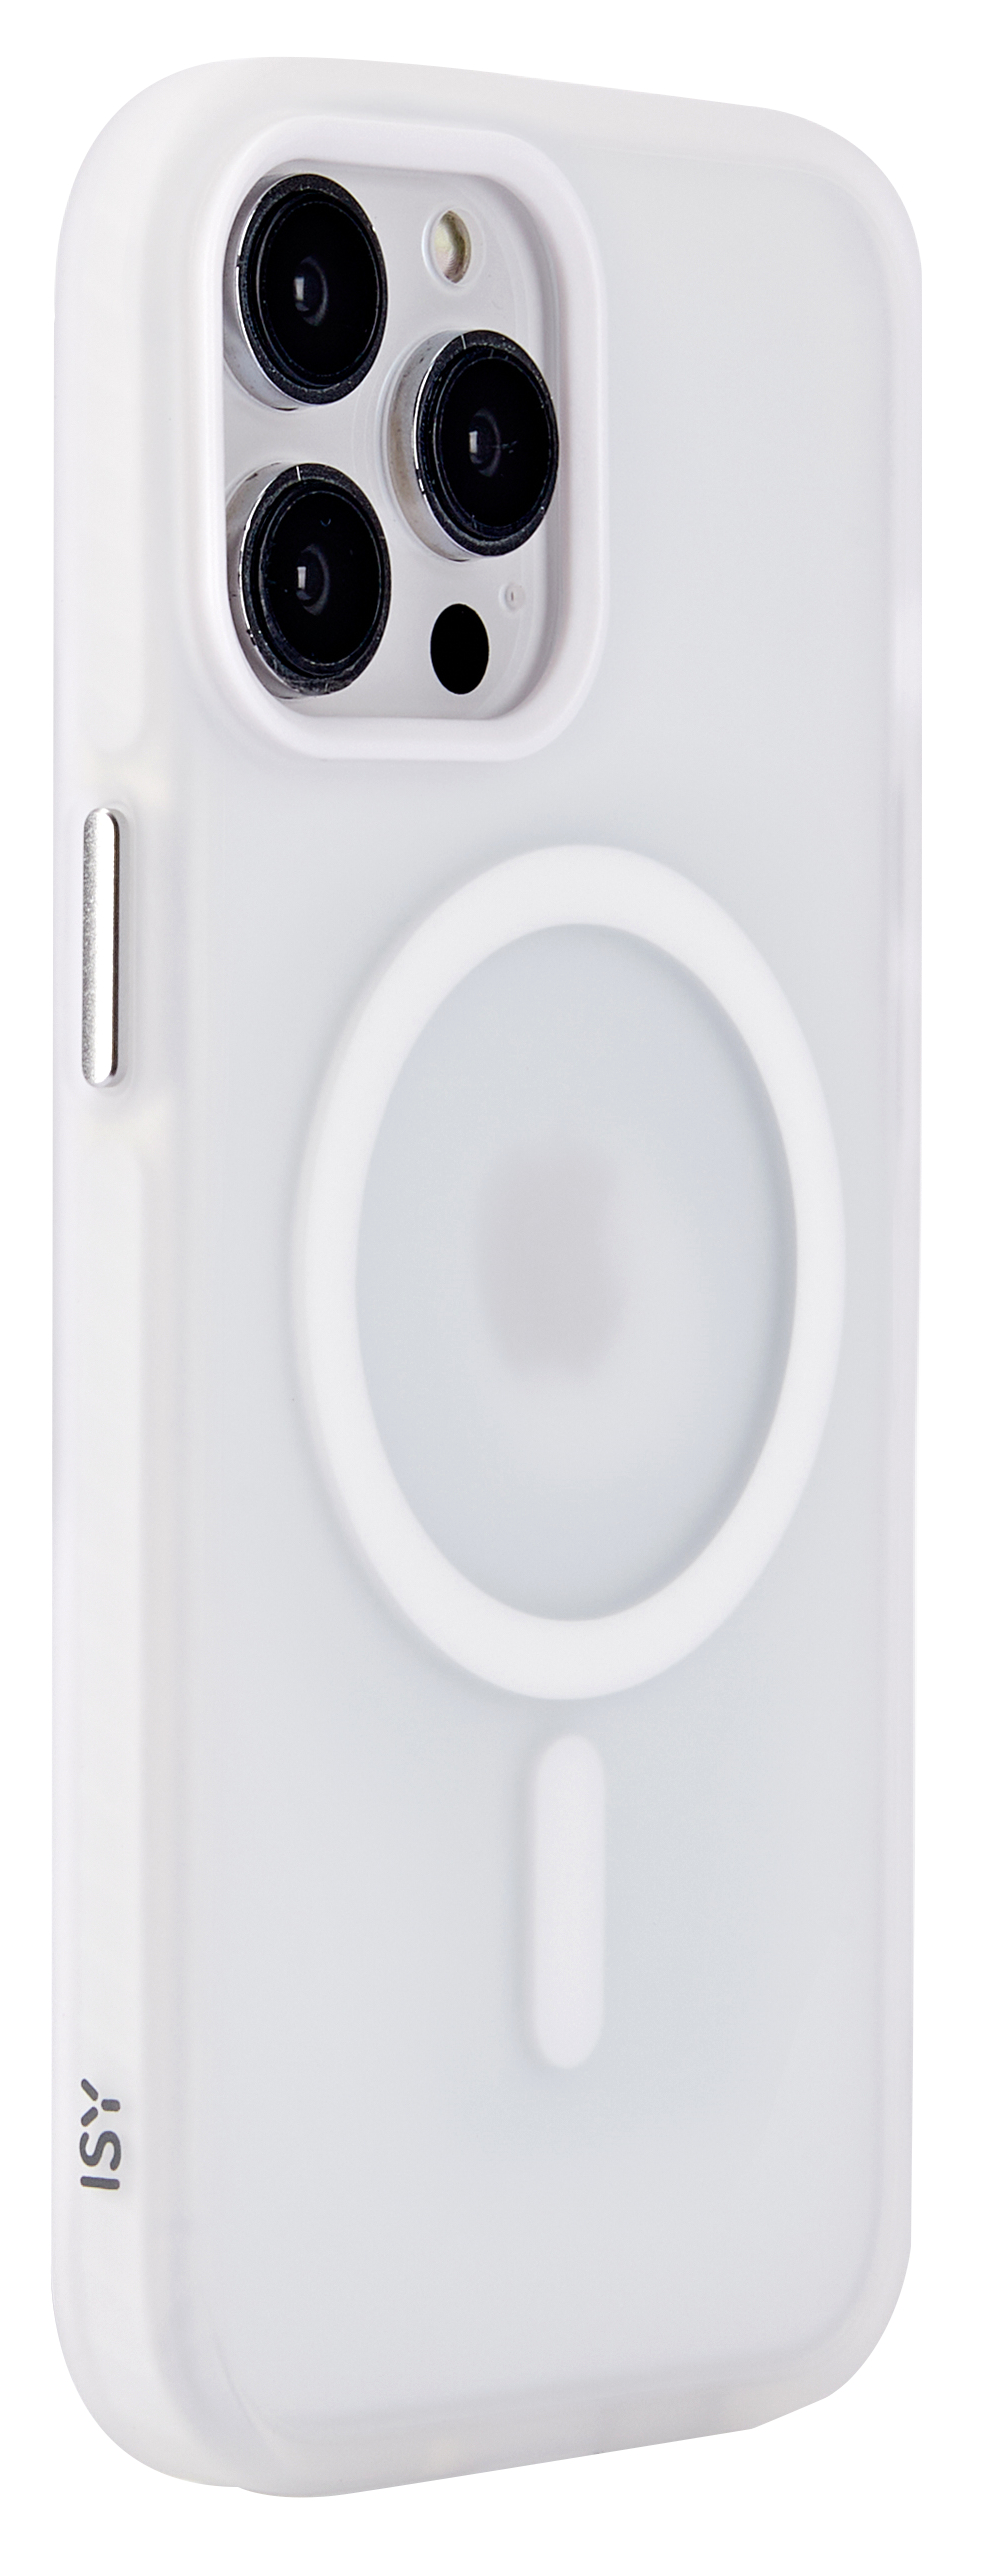 ISY ISC 2445, White 15 iPhone Smokey Backcover, Max, Pro Apple